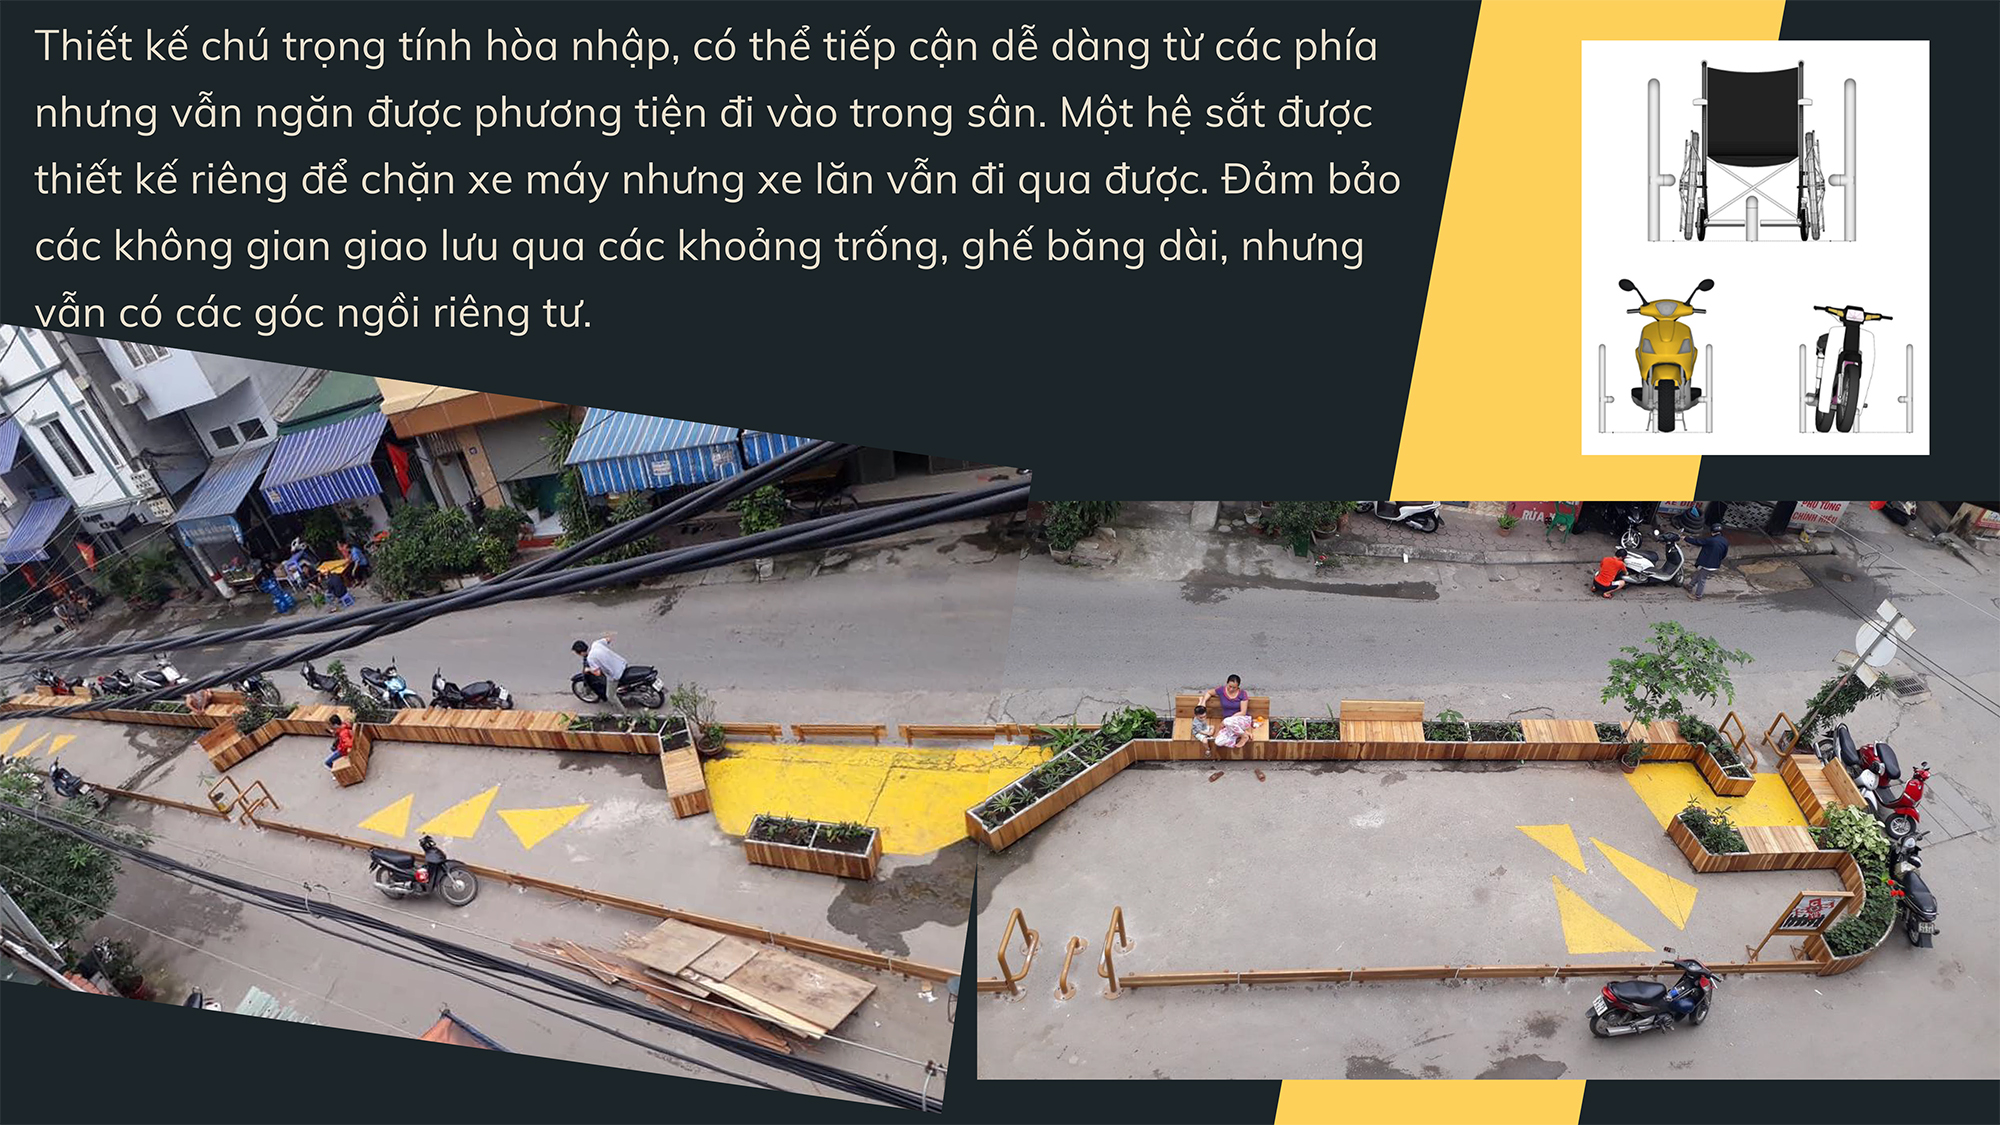 Bài dự thi Designed by Vietnam - parklet khu 8 202008